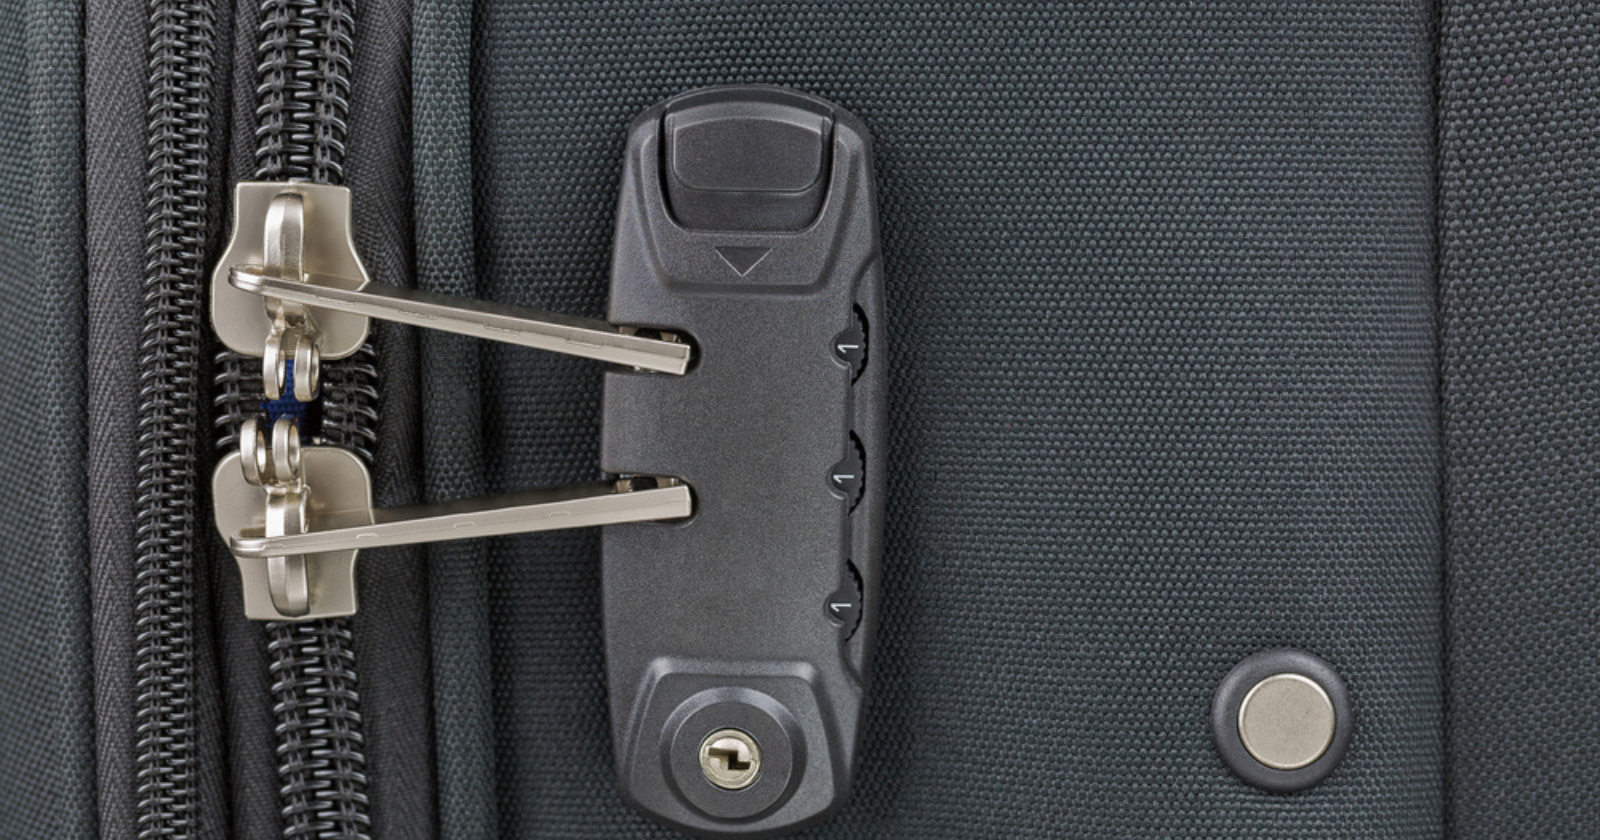 Soft Sided Luggage With TSA Locks 2